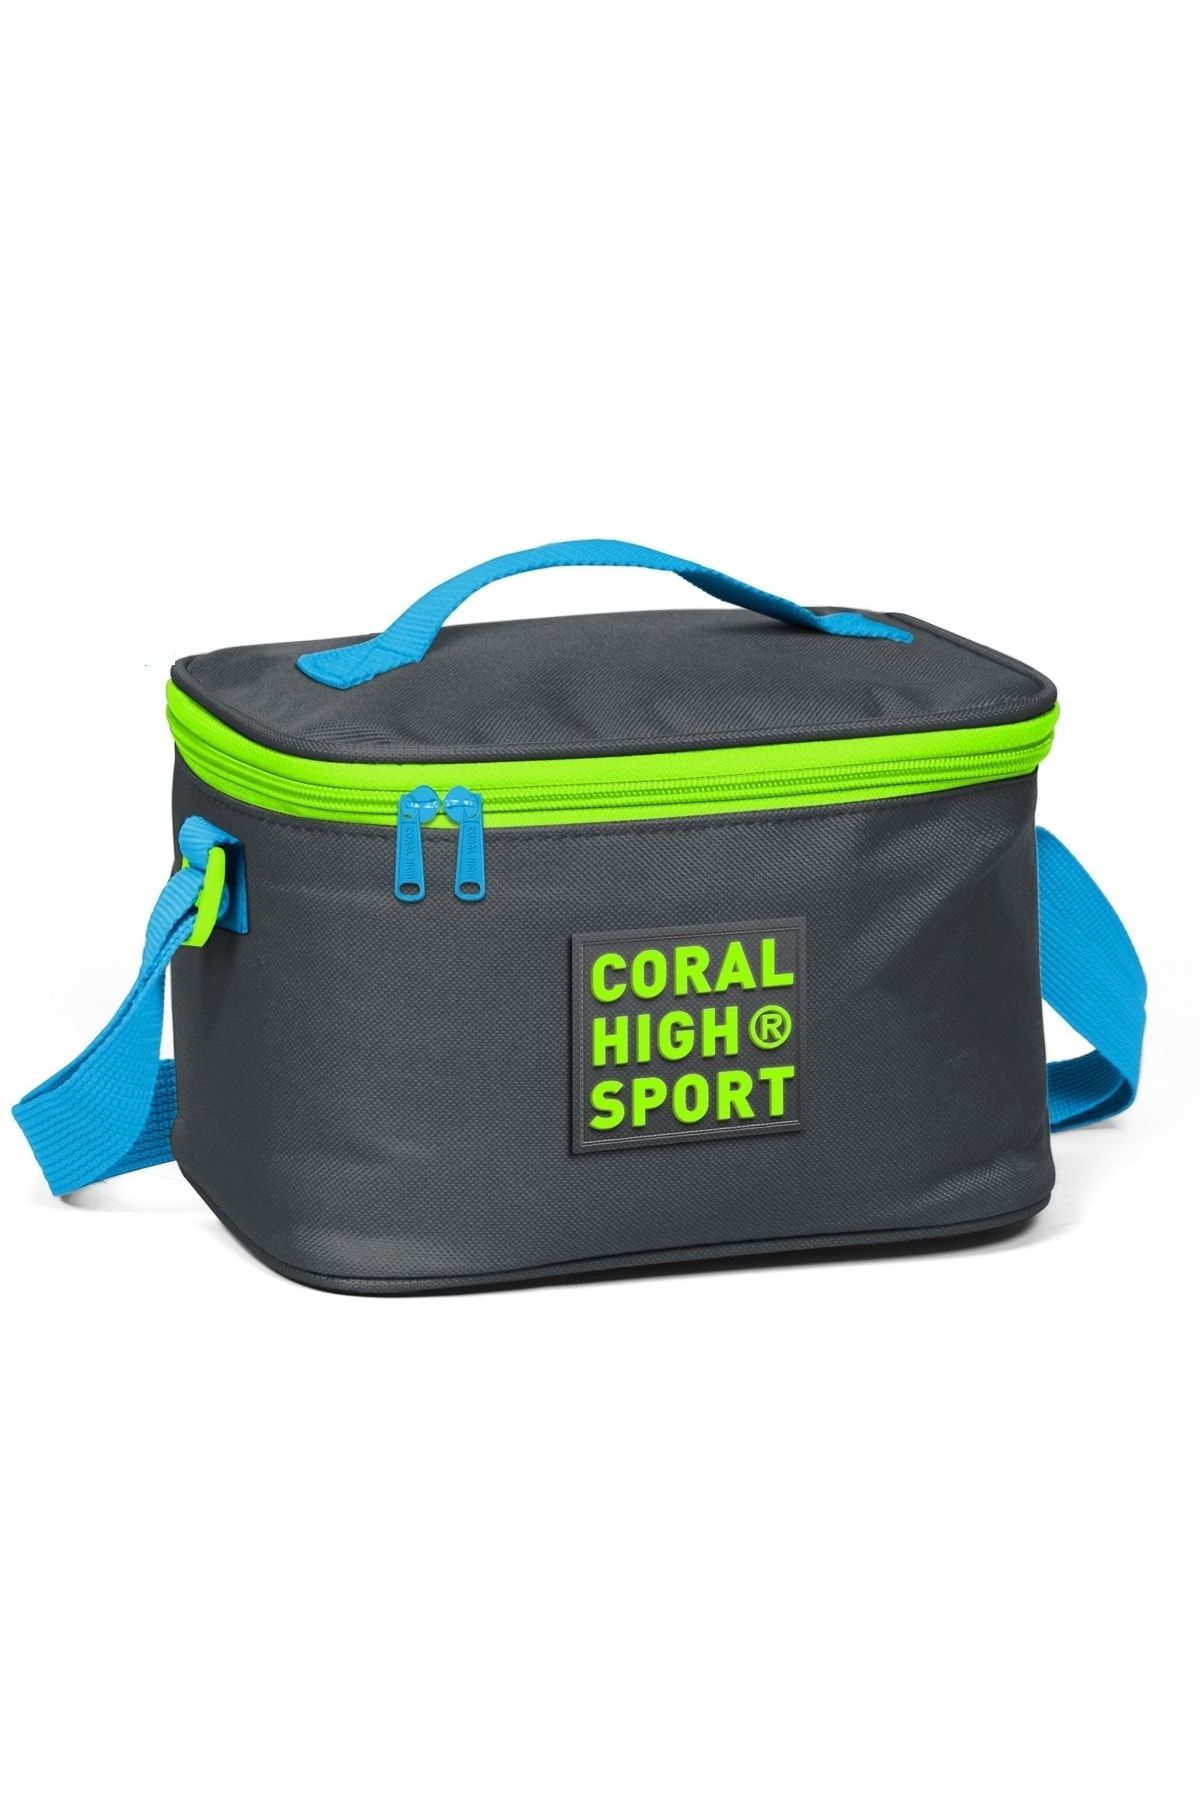 Coral High Sport Gri Thermo Beslenme Çantası